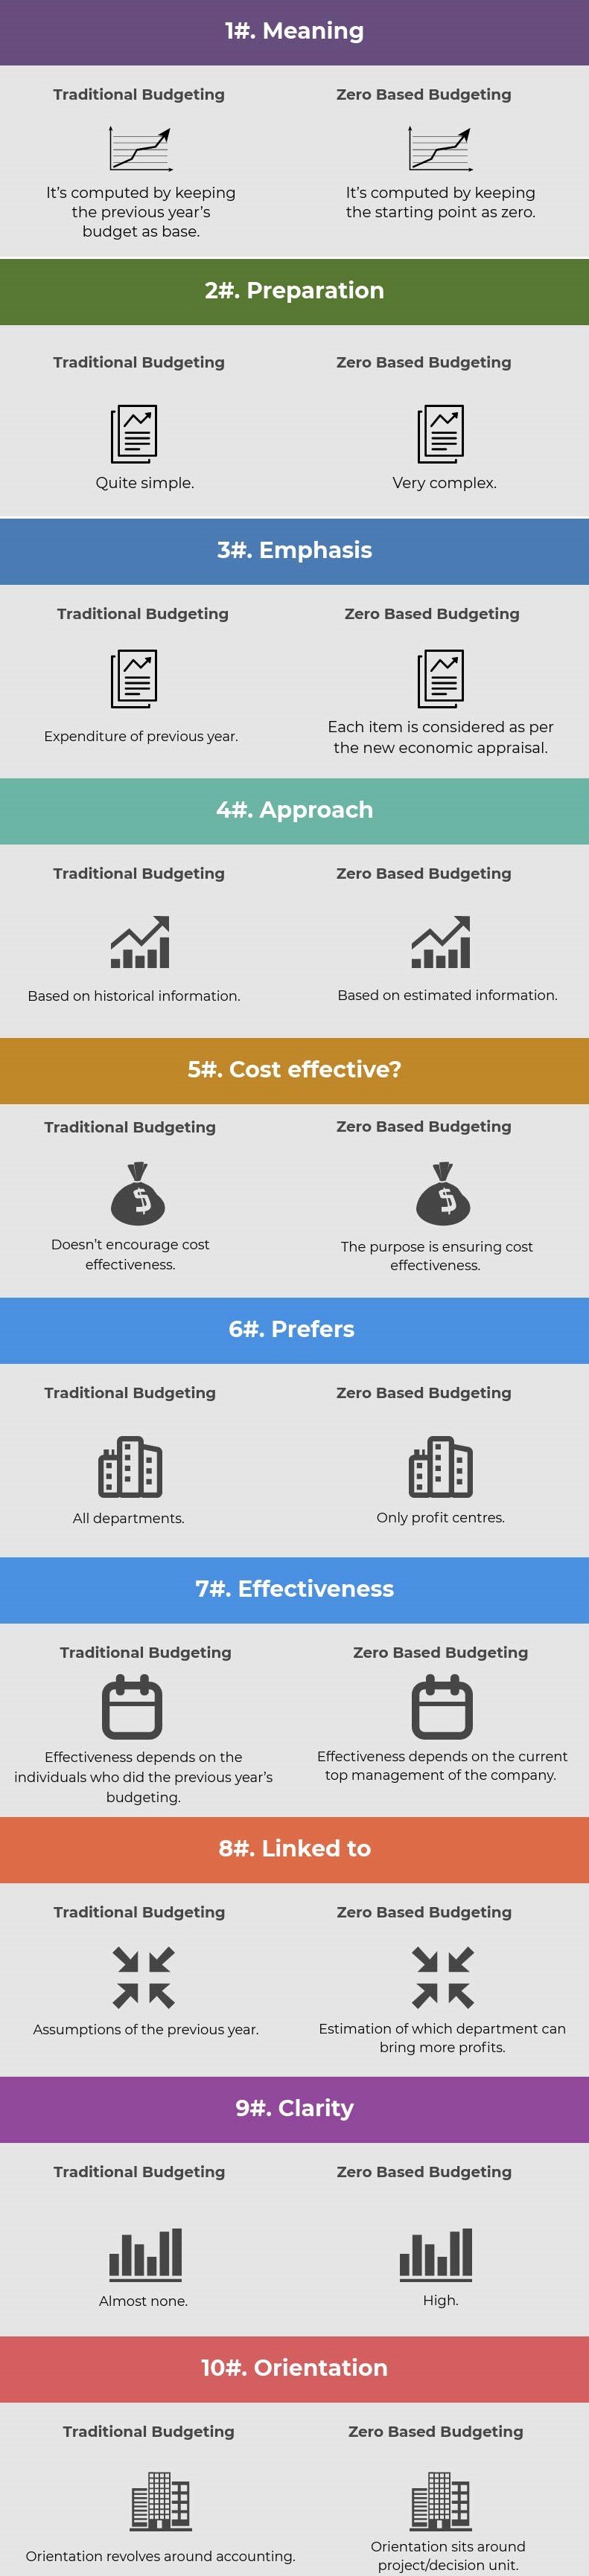 Traditional-budgeting-vs-Zero-based-budgeting